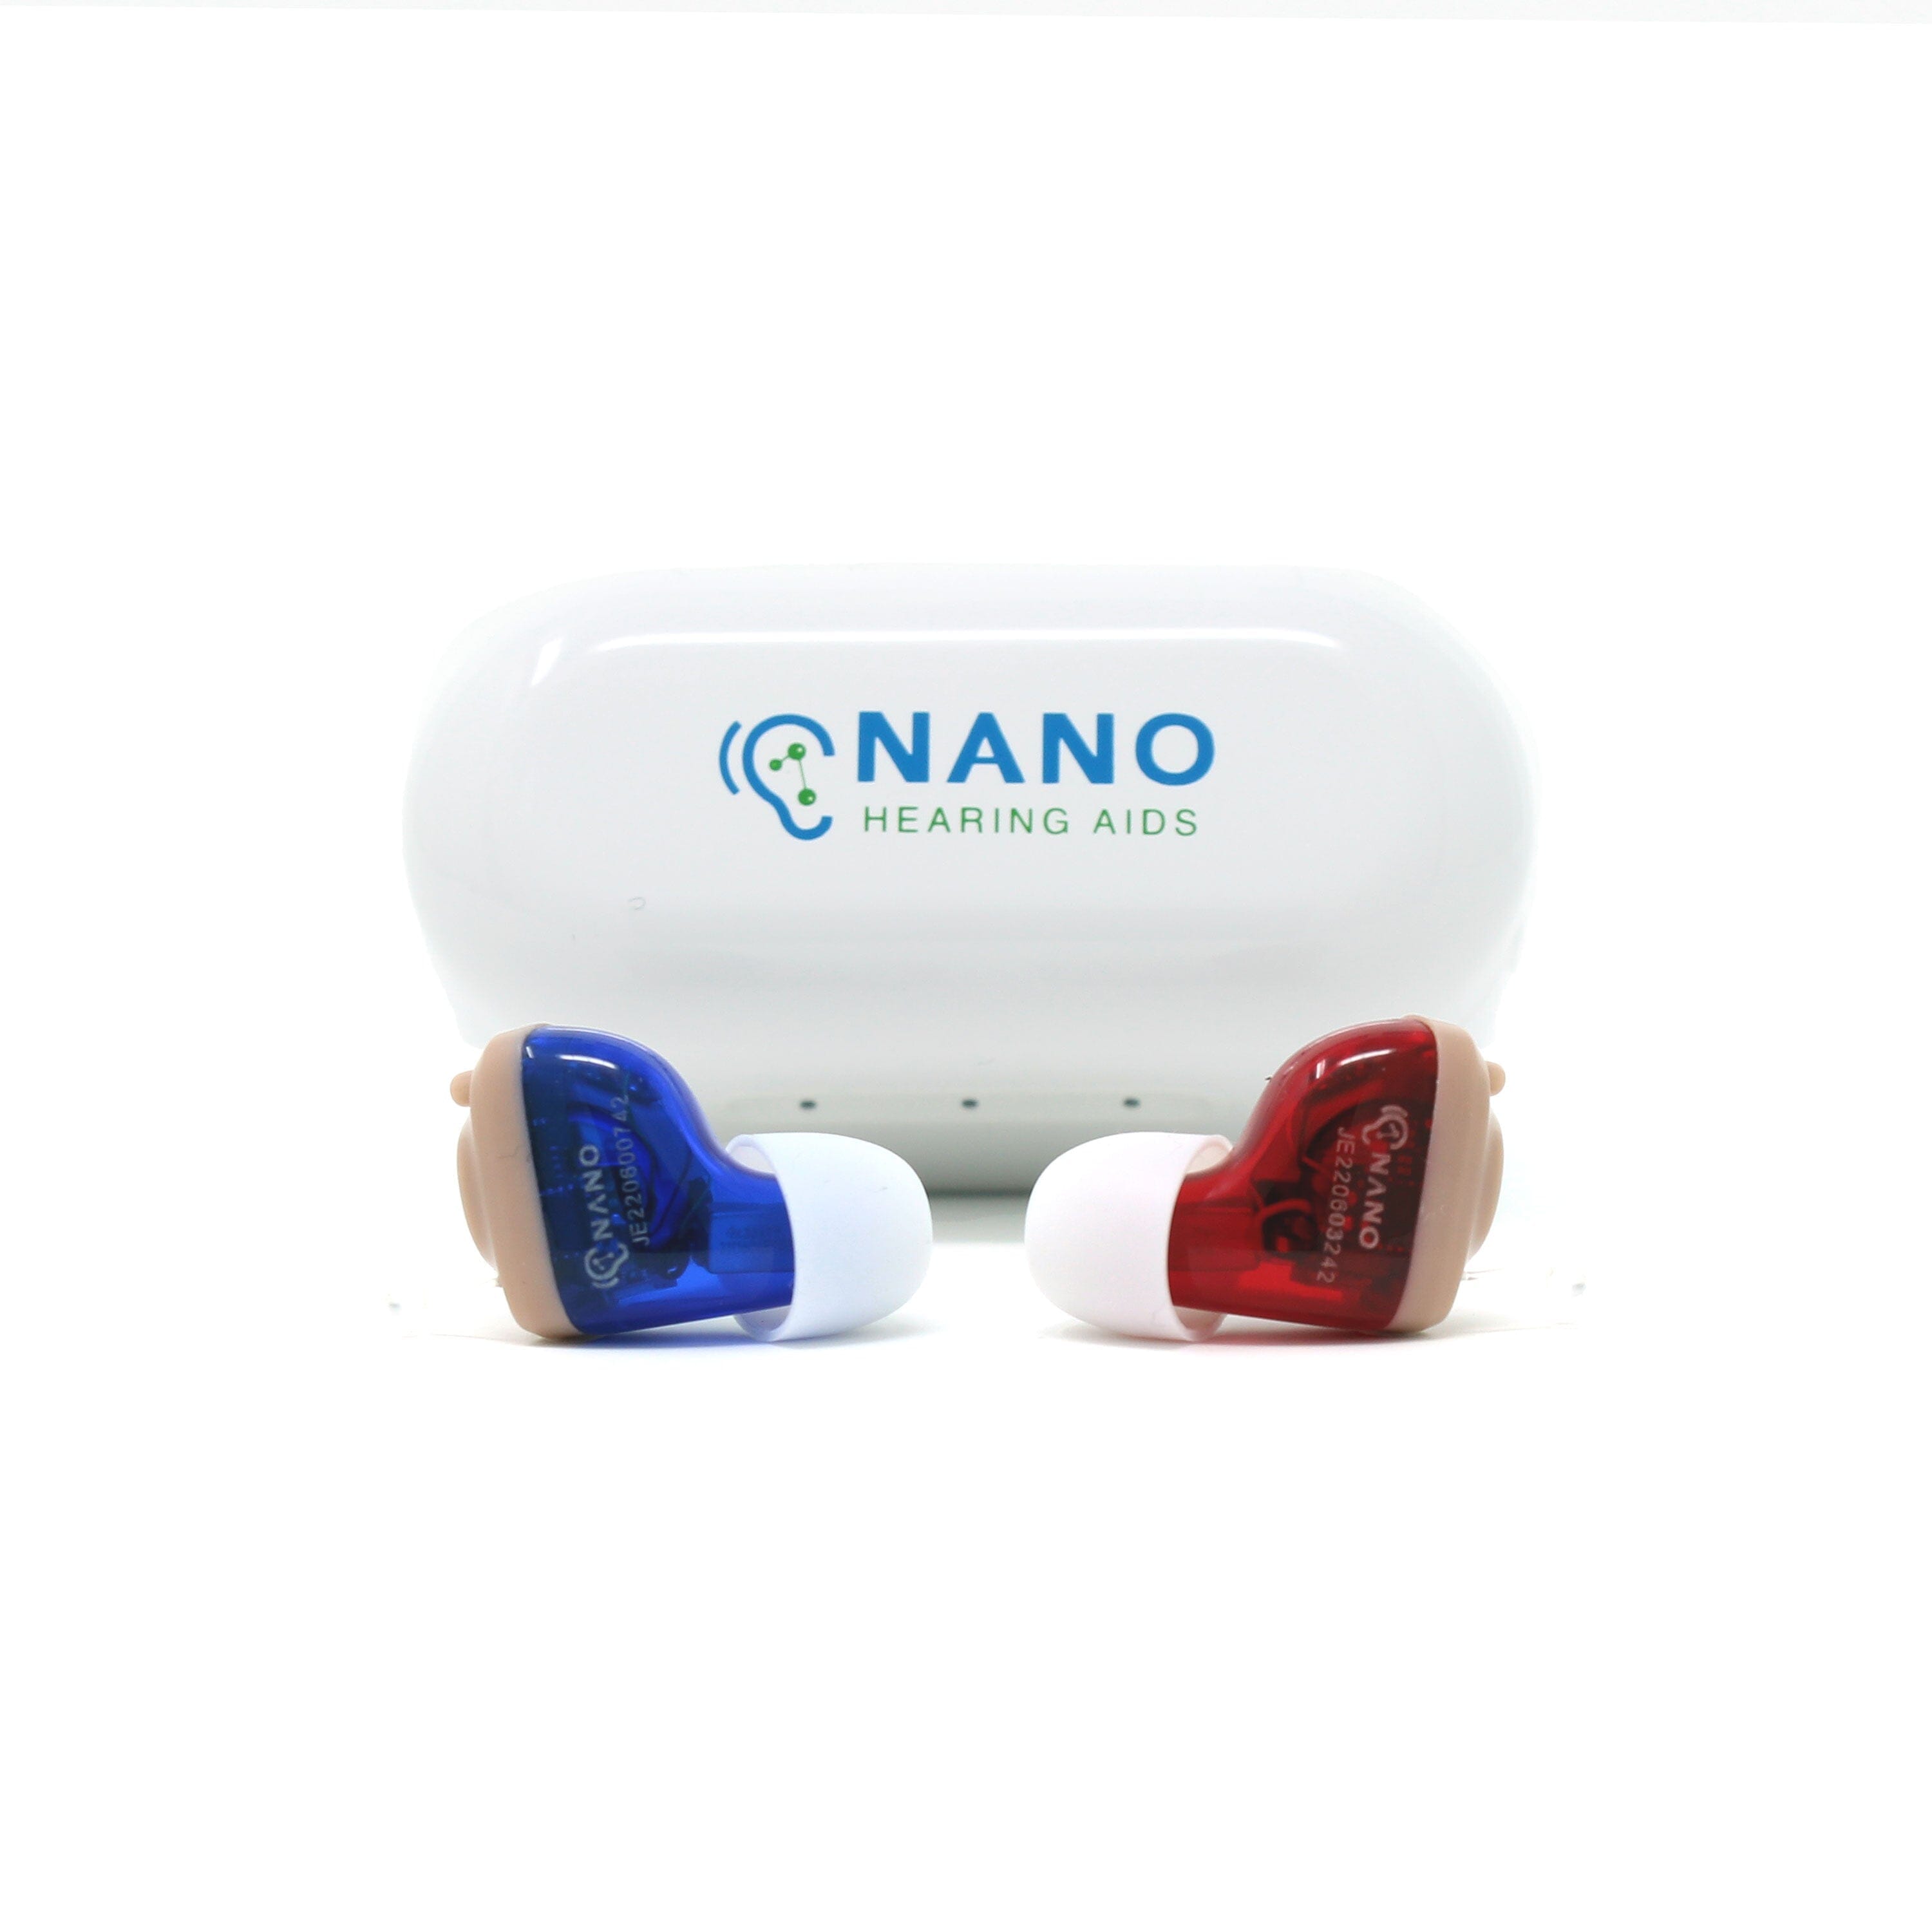 Refurbished: BUNDLE: NANO CIC Recharge OTC Hearing Aids + Elite Protection Plan